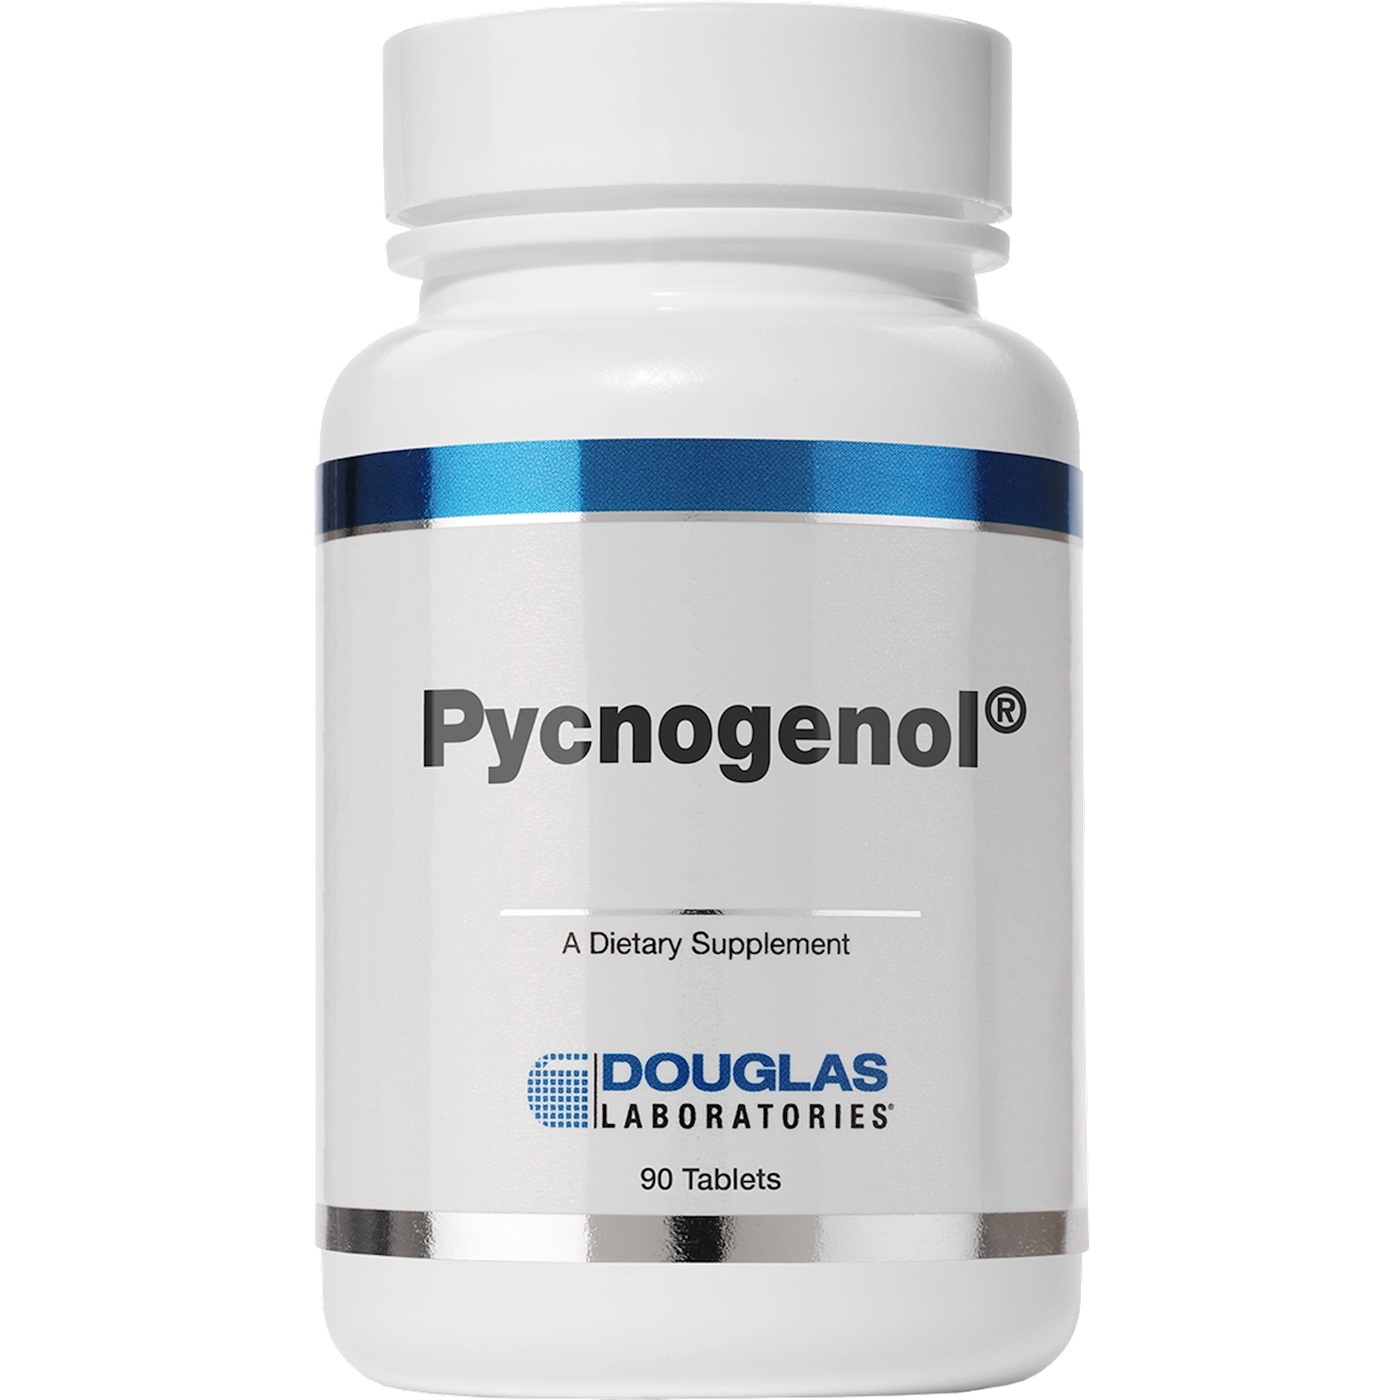 Pycnogenol 50 mg  Curated Wellness